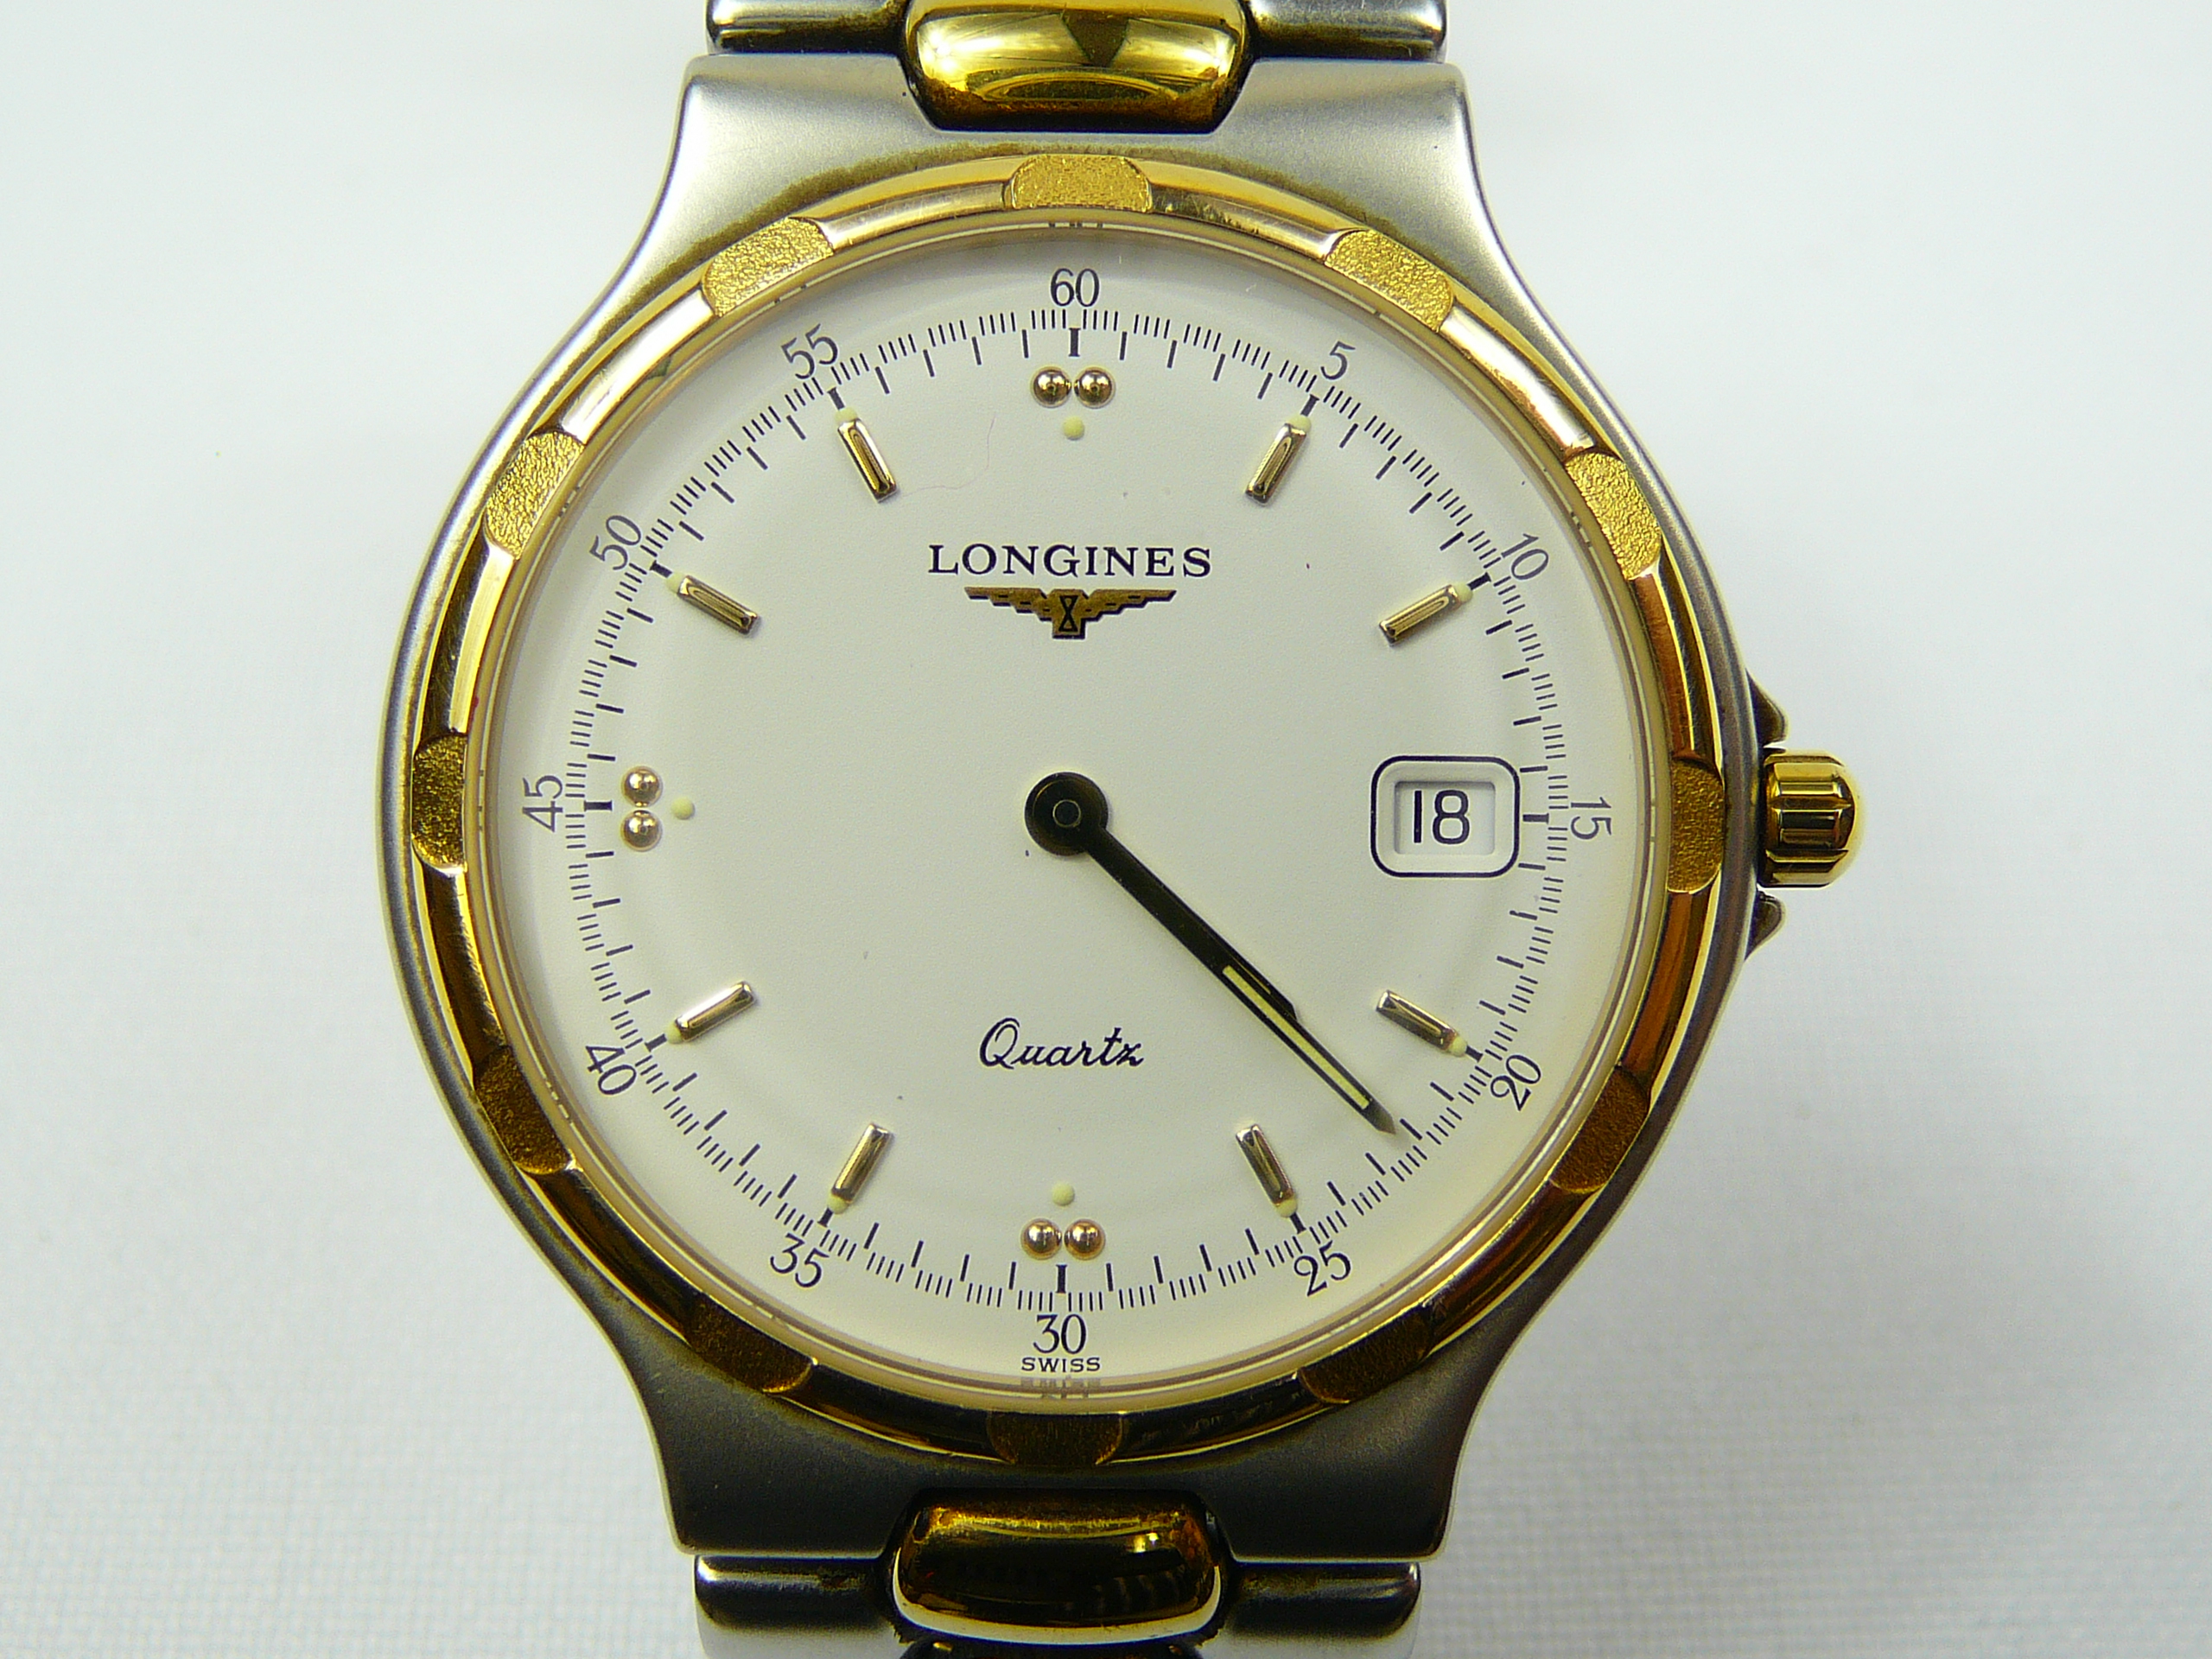 Gents Longines wrist watch - Image 2 of 3